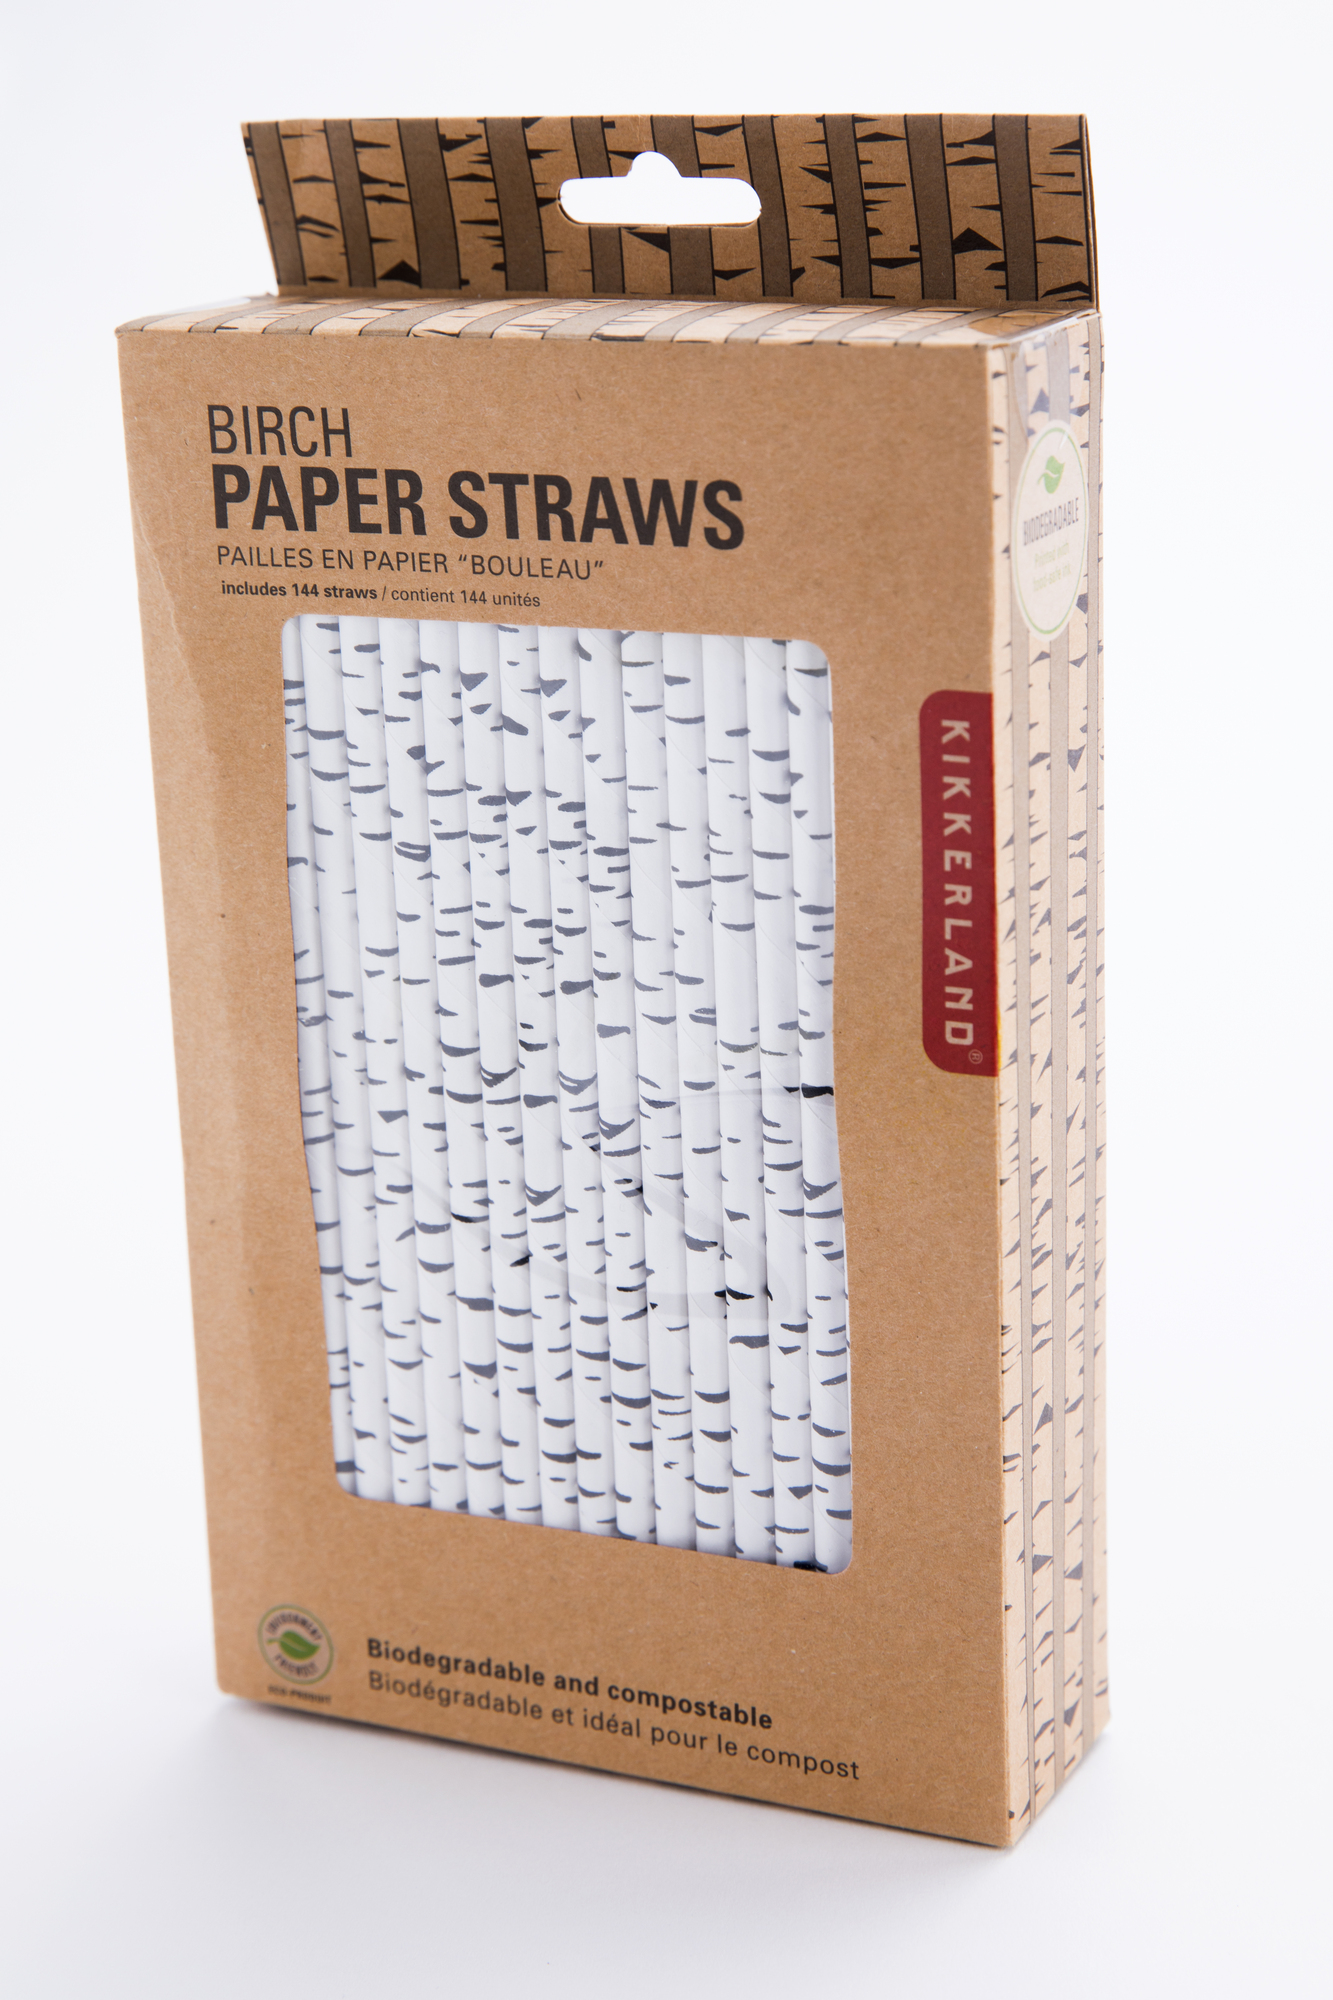 Birch-like paper straws, $9